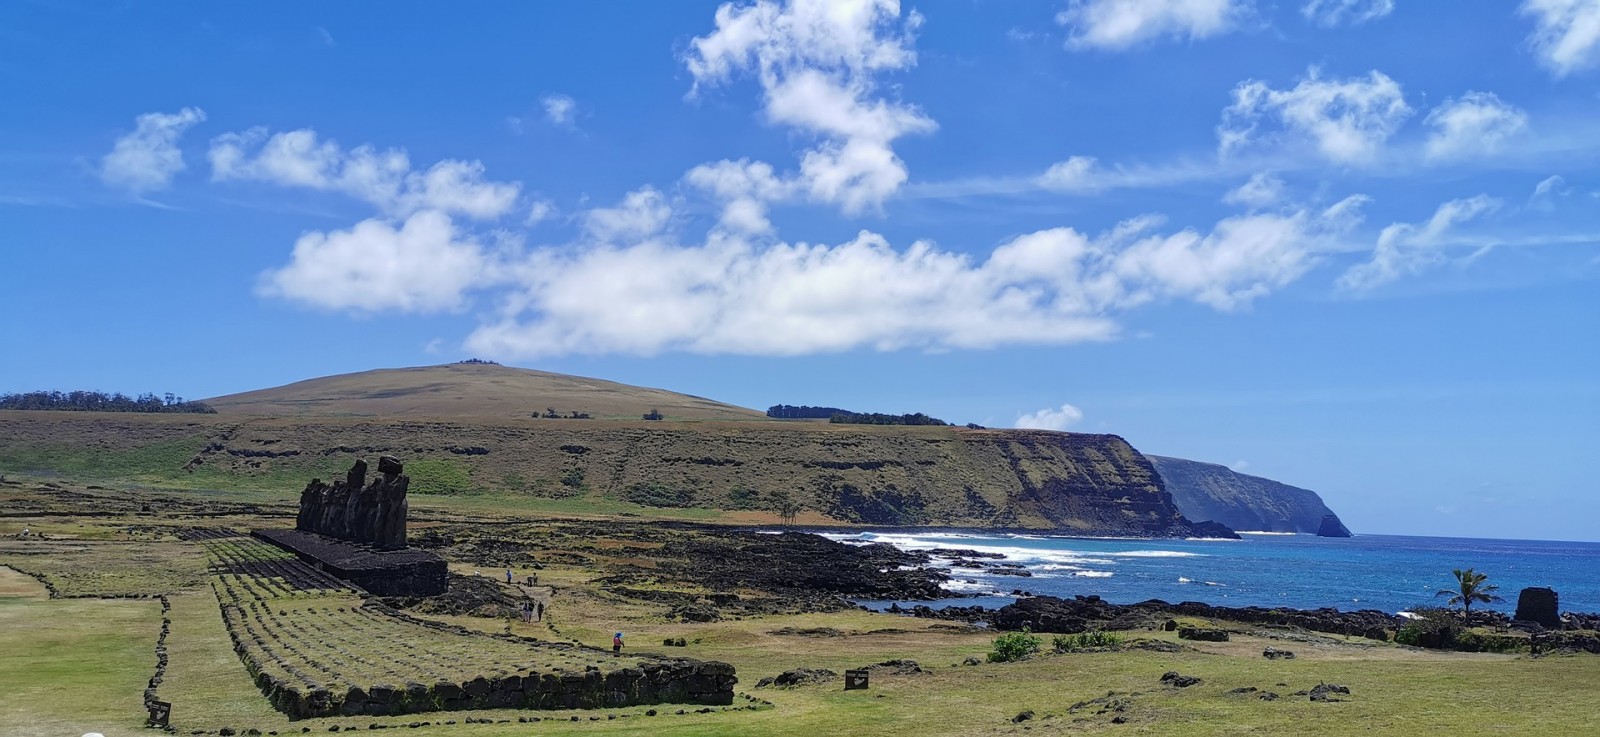 The shoreline of Easter Island (Rapa Nui)